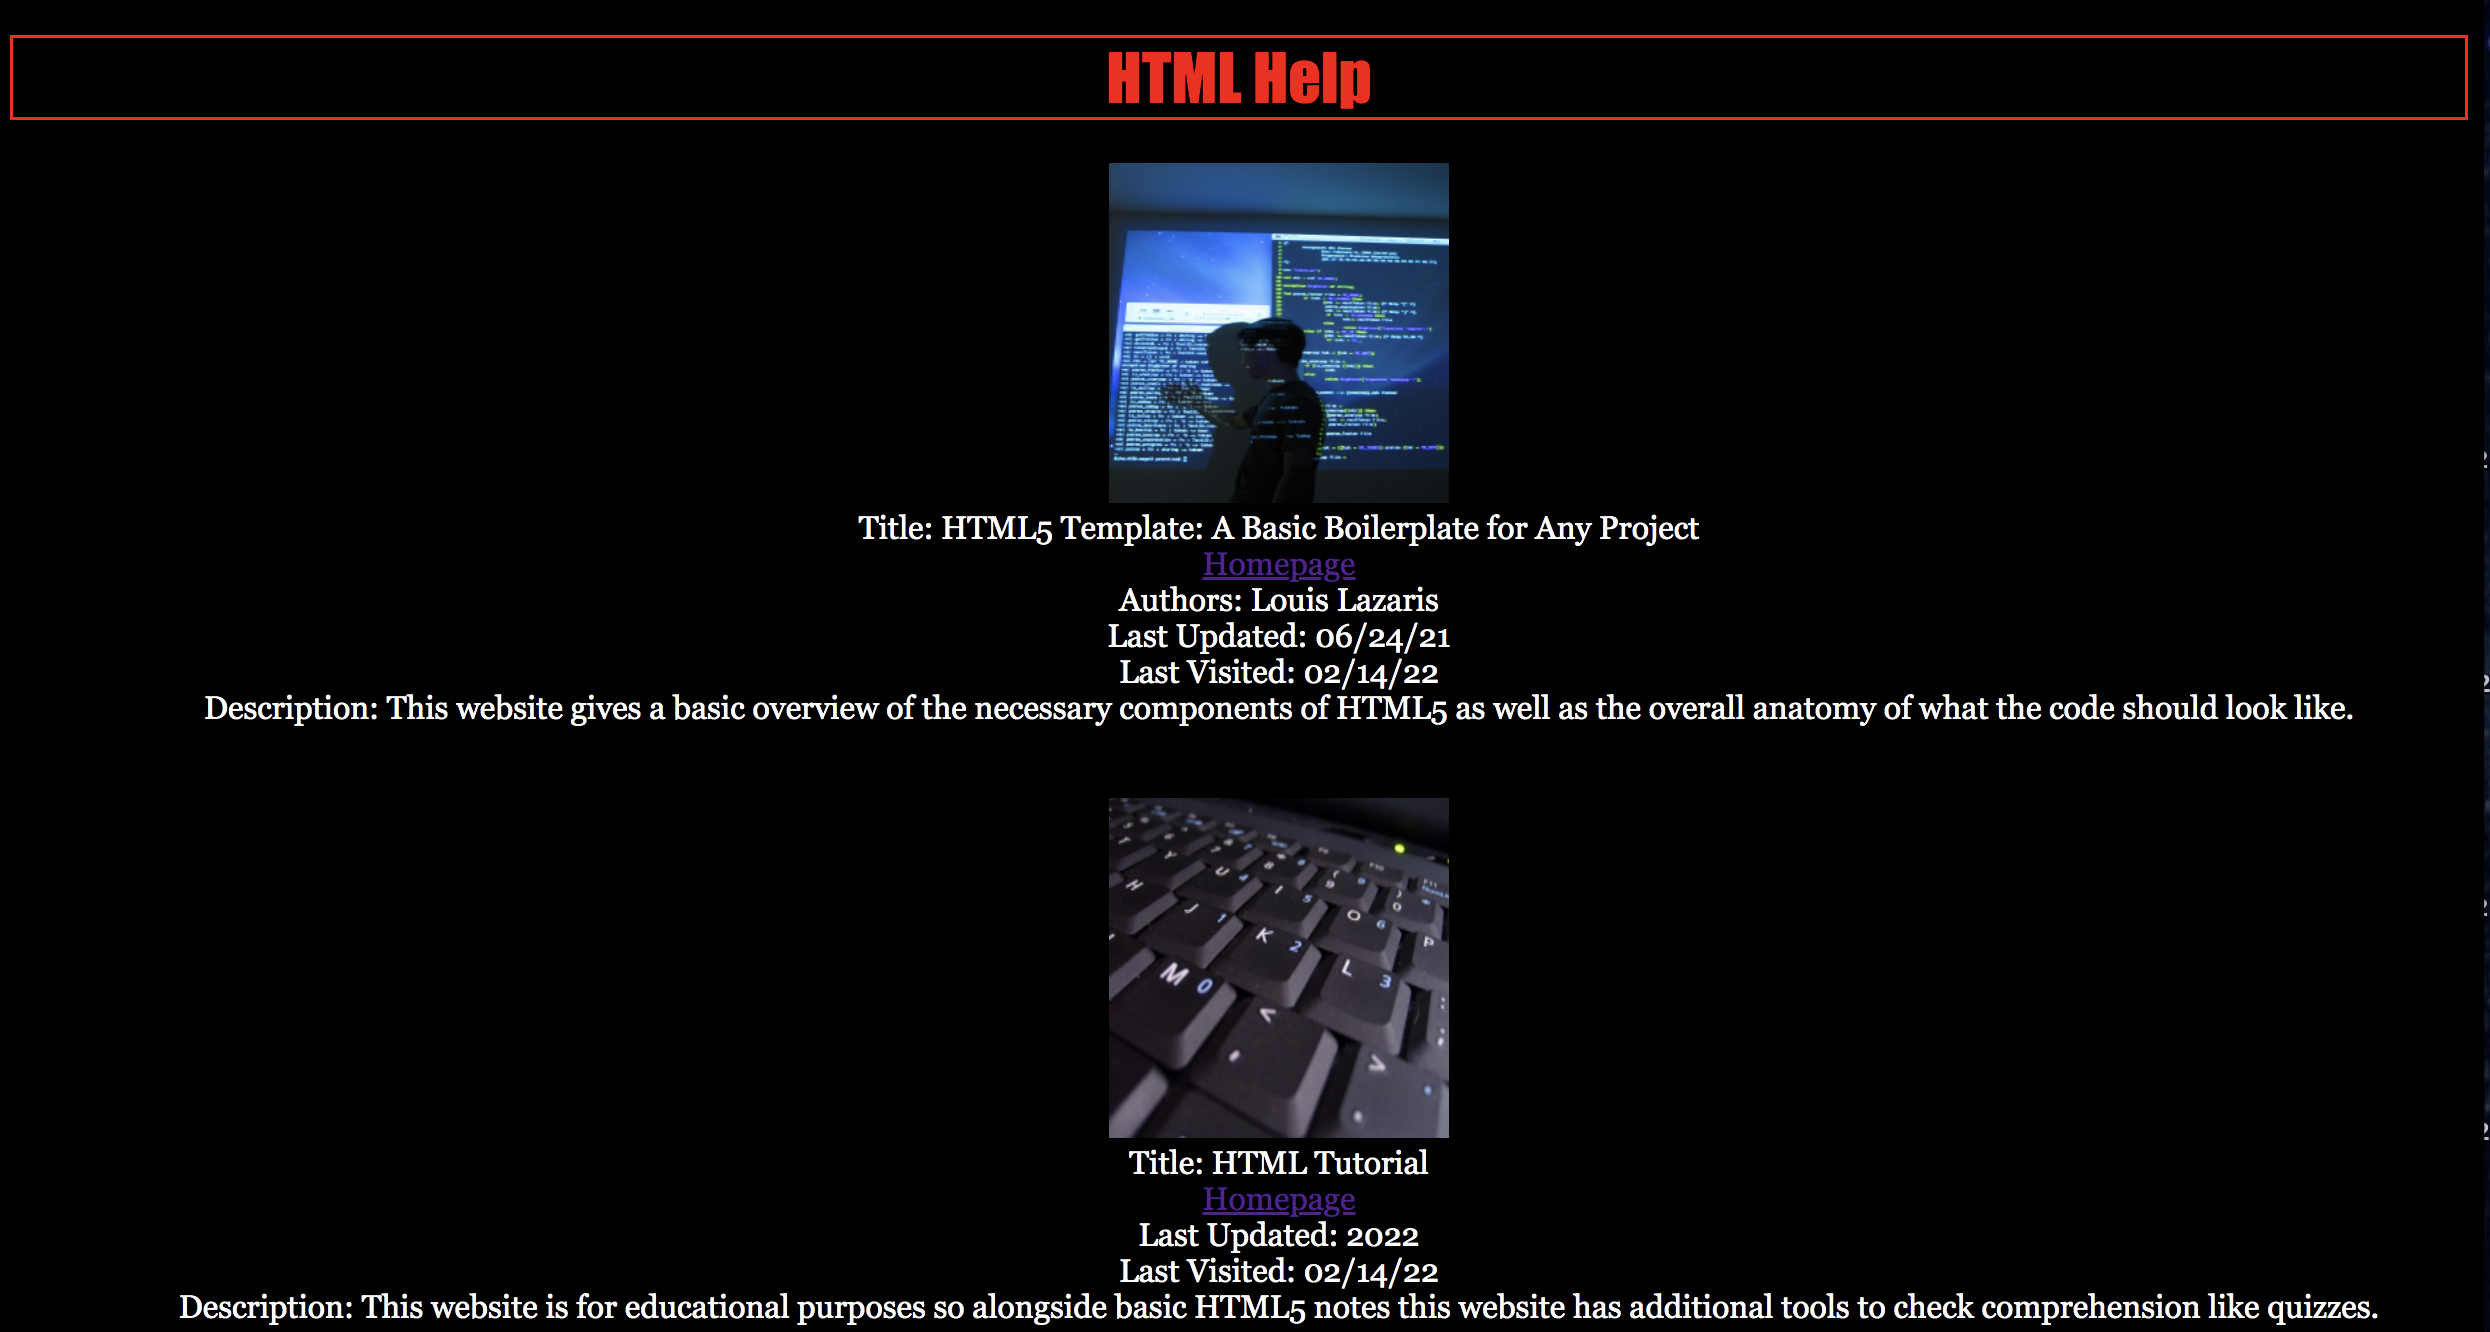 webpage screenshot